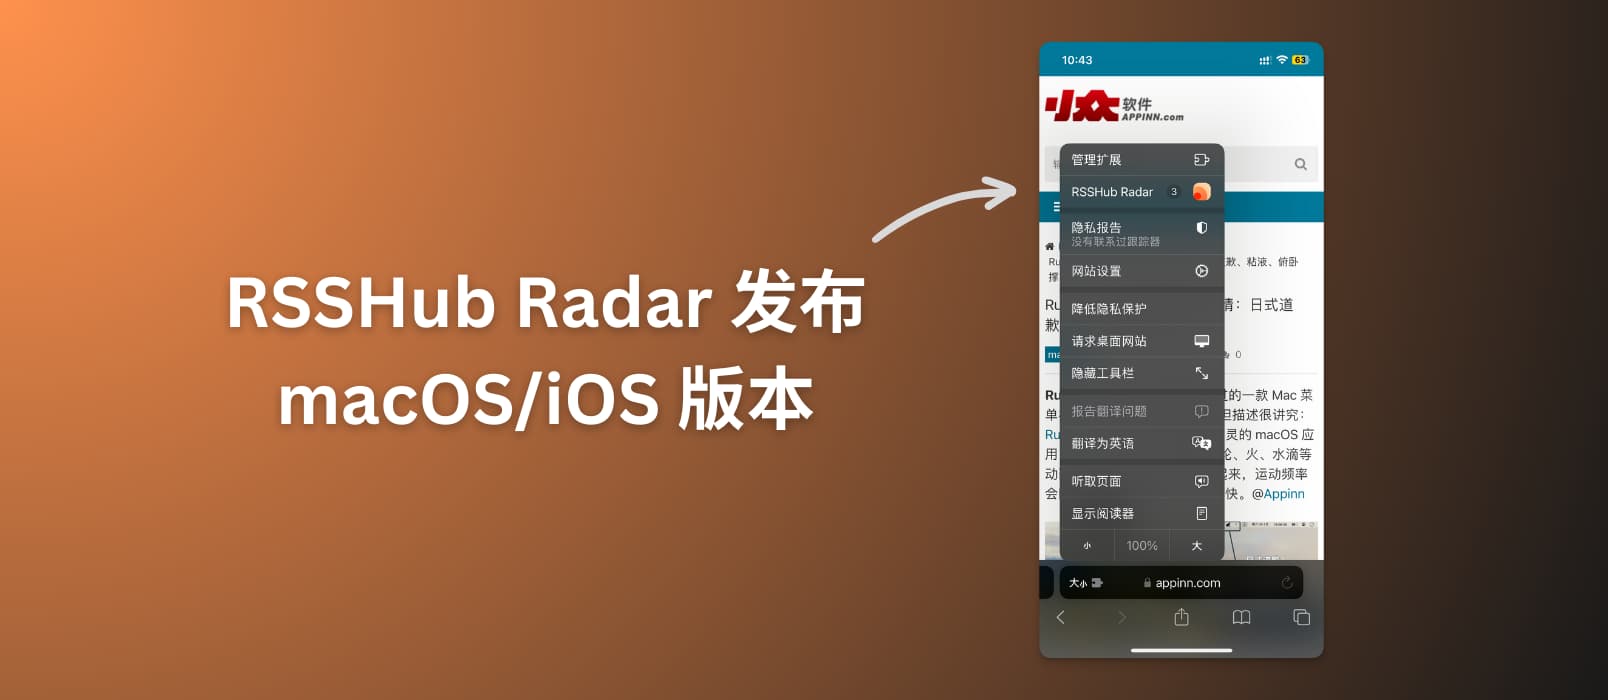 RSSHub Radar 发布 macOS/iOS 版本，可在 Safari 中快速发现 RSS 并订阅